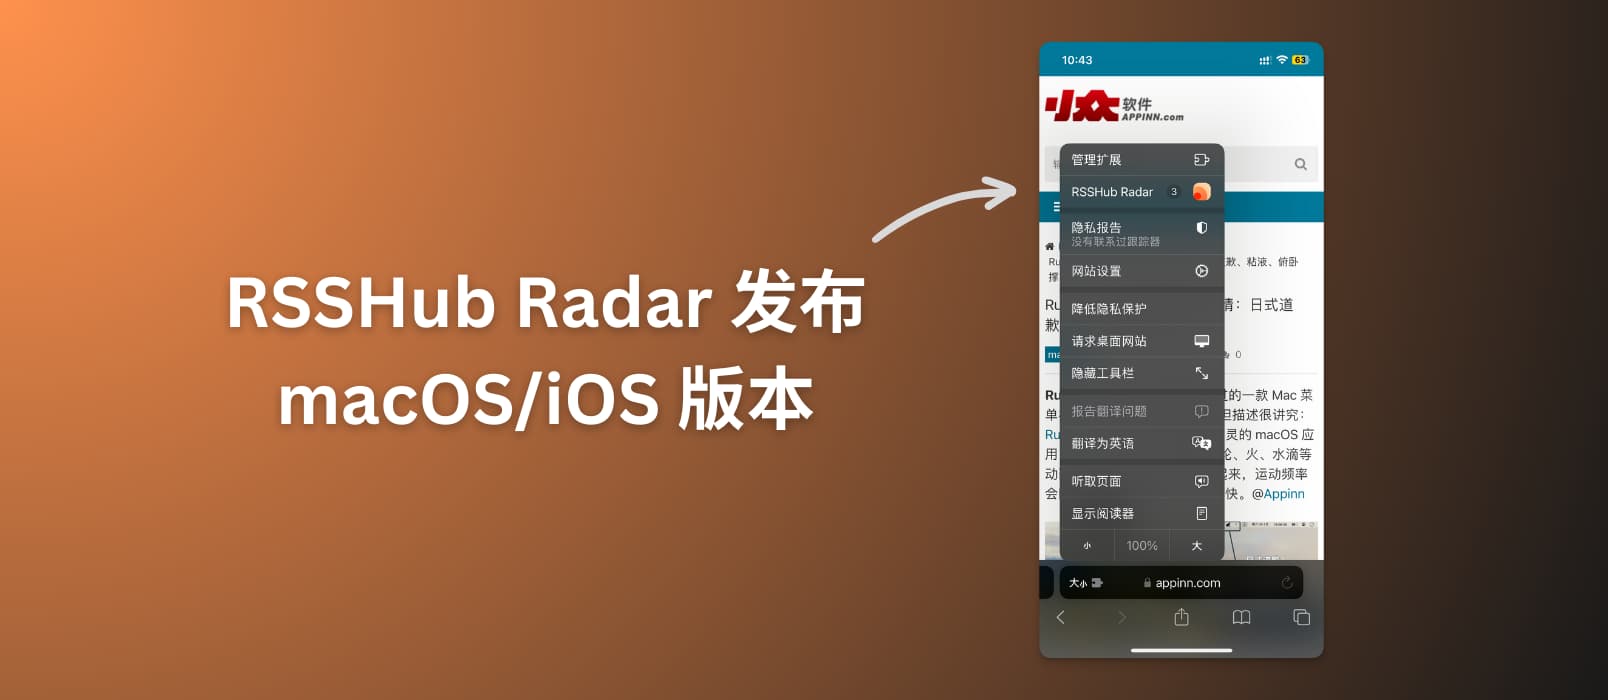 RSSHub Radar 发布 macOS/iOS 版本，可在 Safari 中快速发现 RSS 并订阅